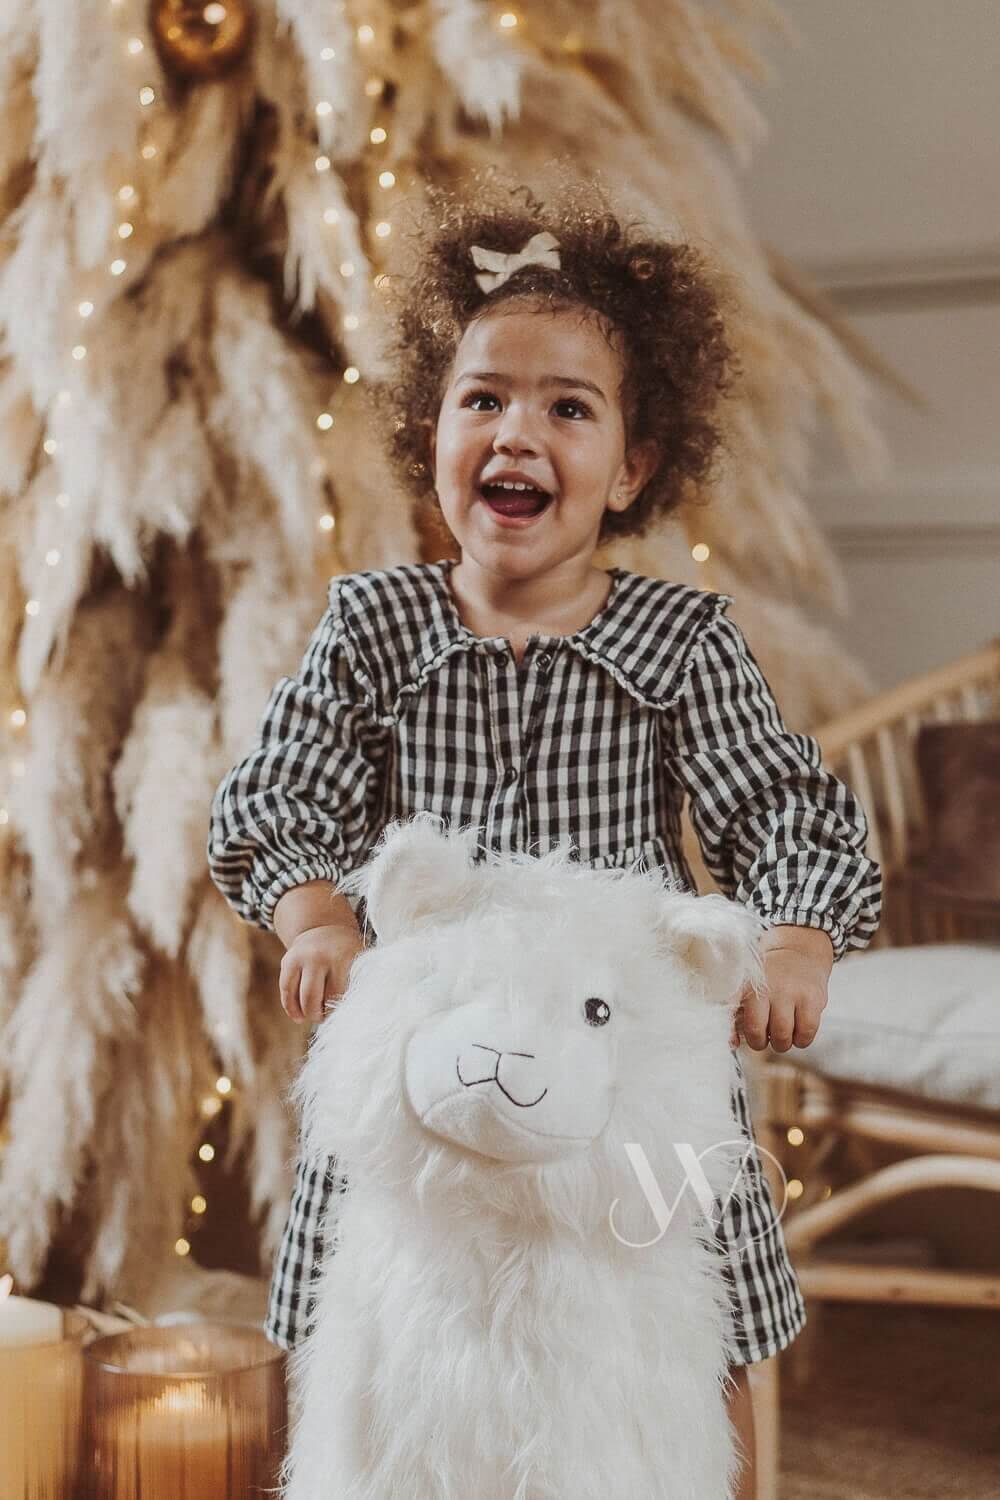 Joyful child with toy by Christmas tree.